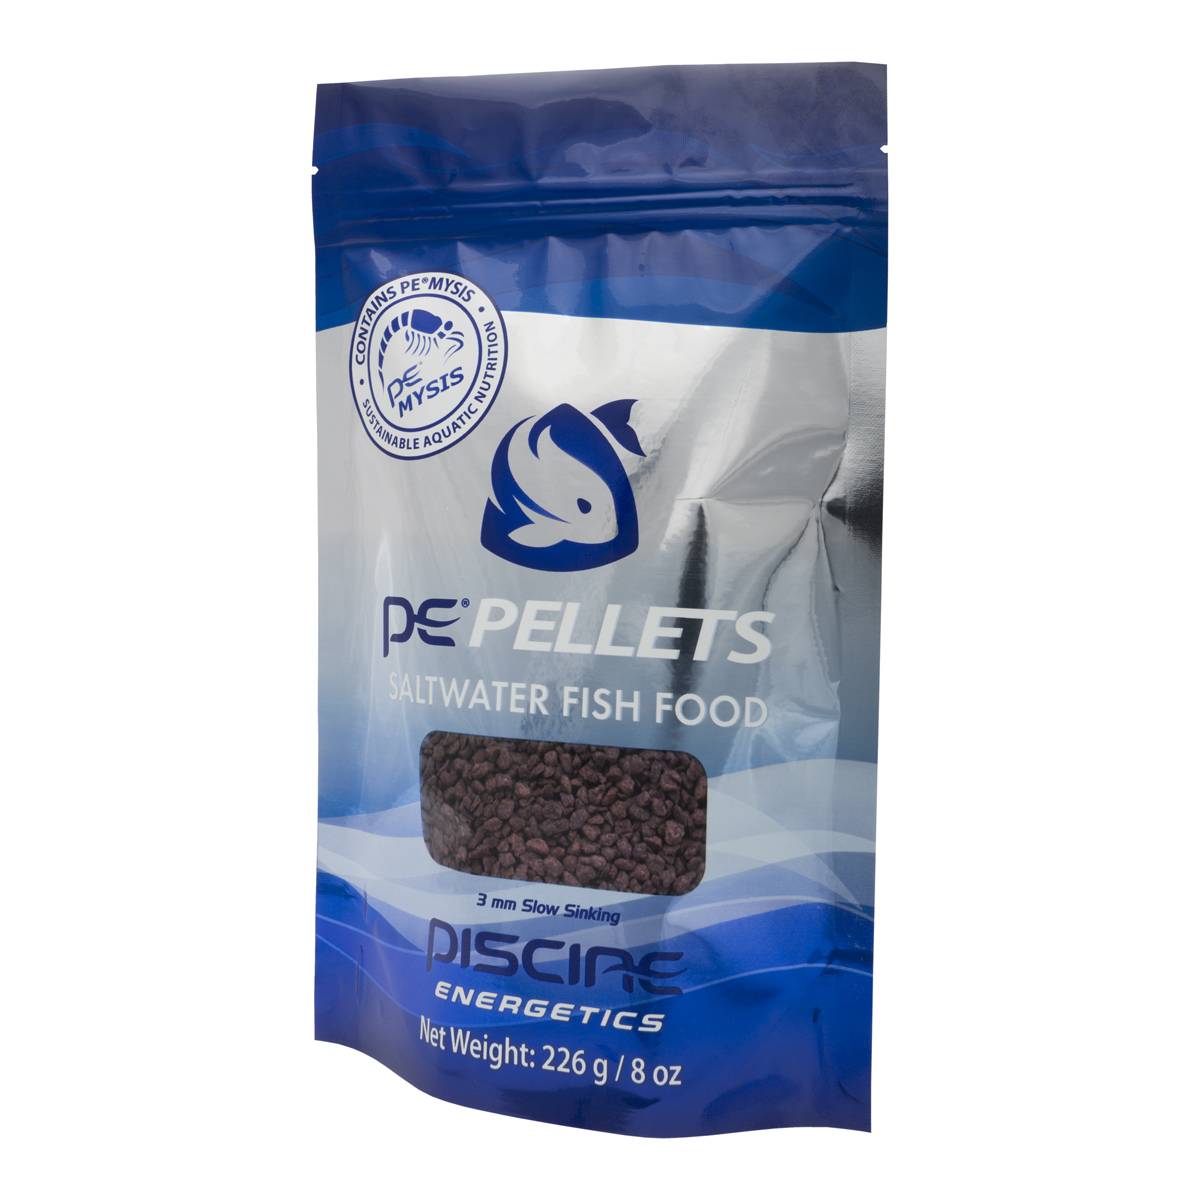 PE Pellets Saltwater Fish Food - PE - Piscine Energetics